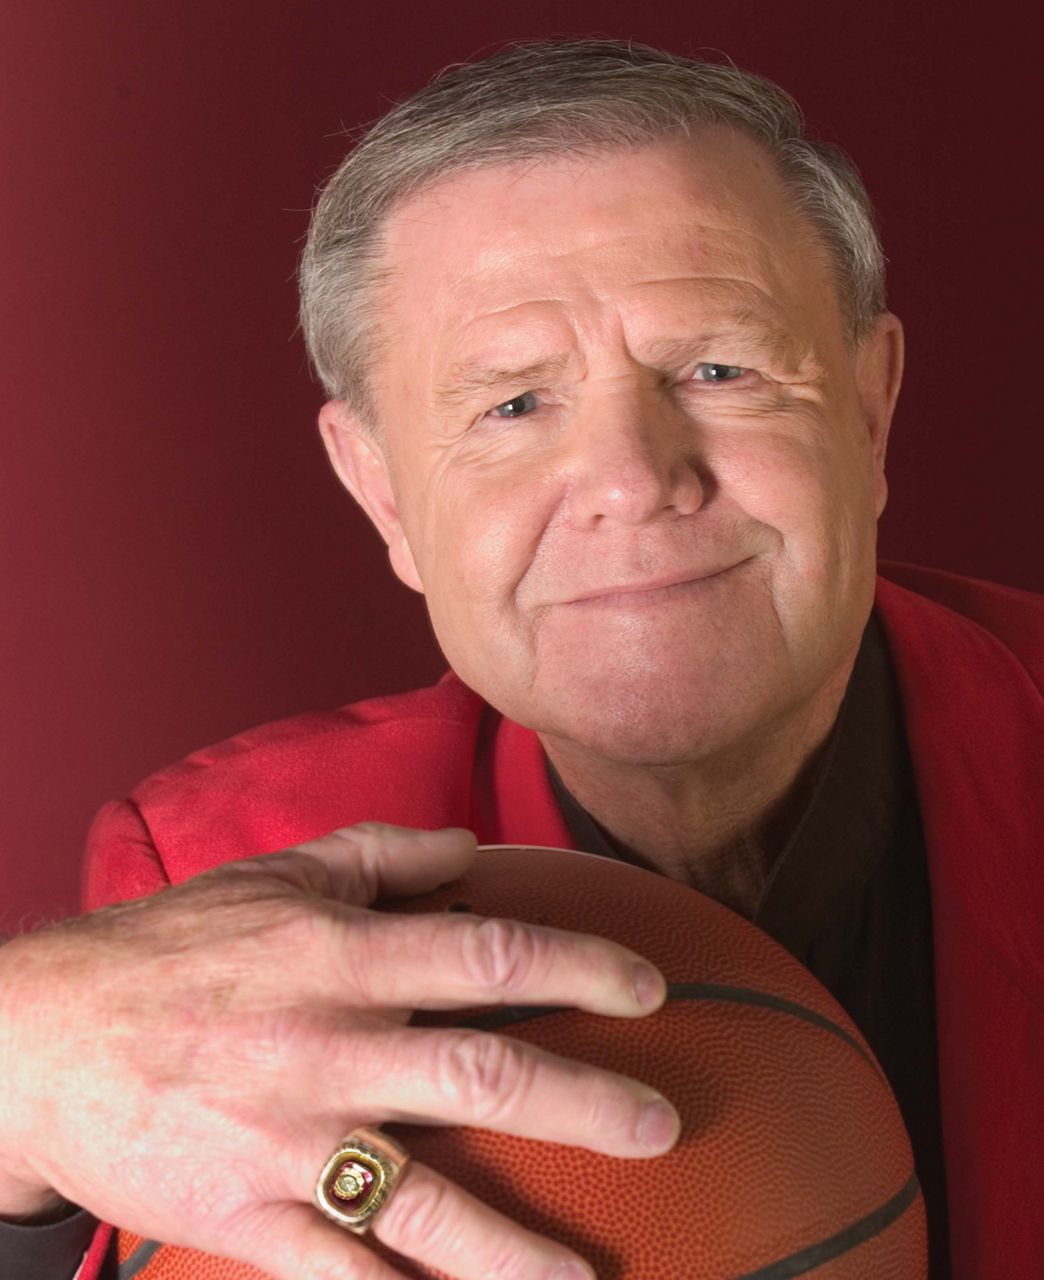 UofL remembers legendary Louisville men's basketball coach Denny